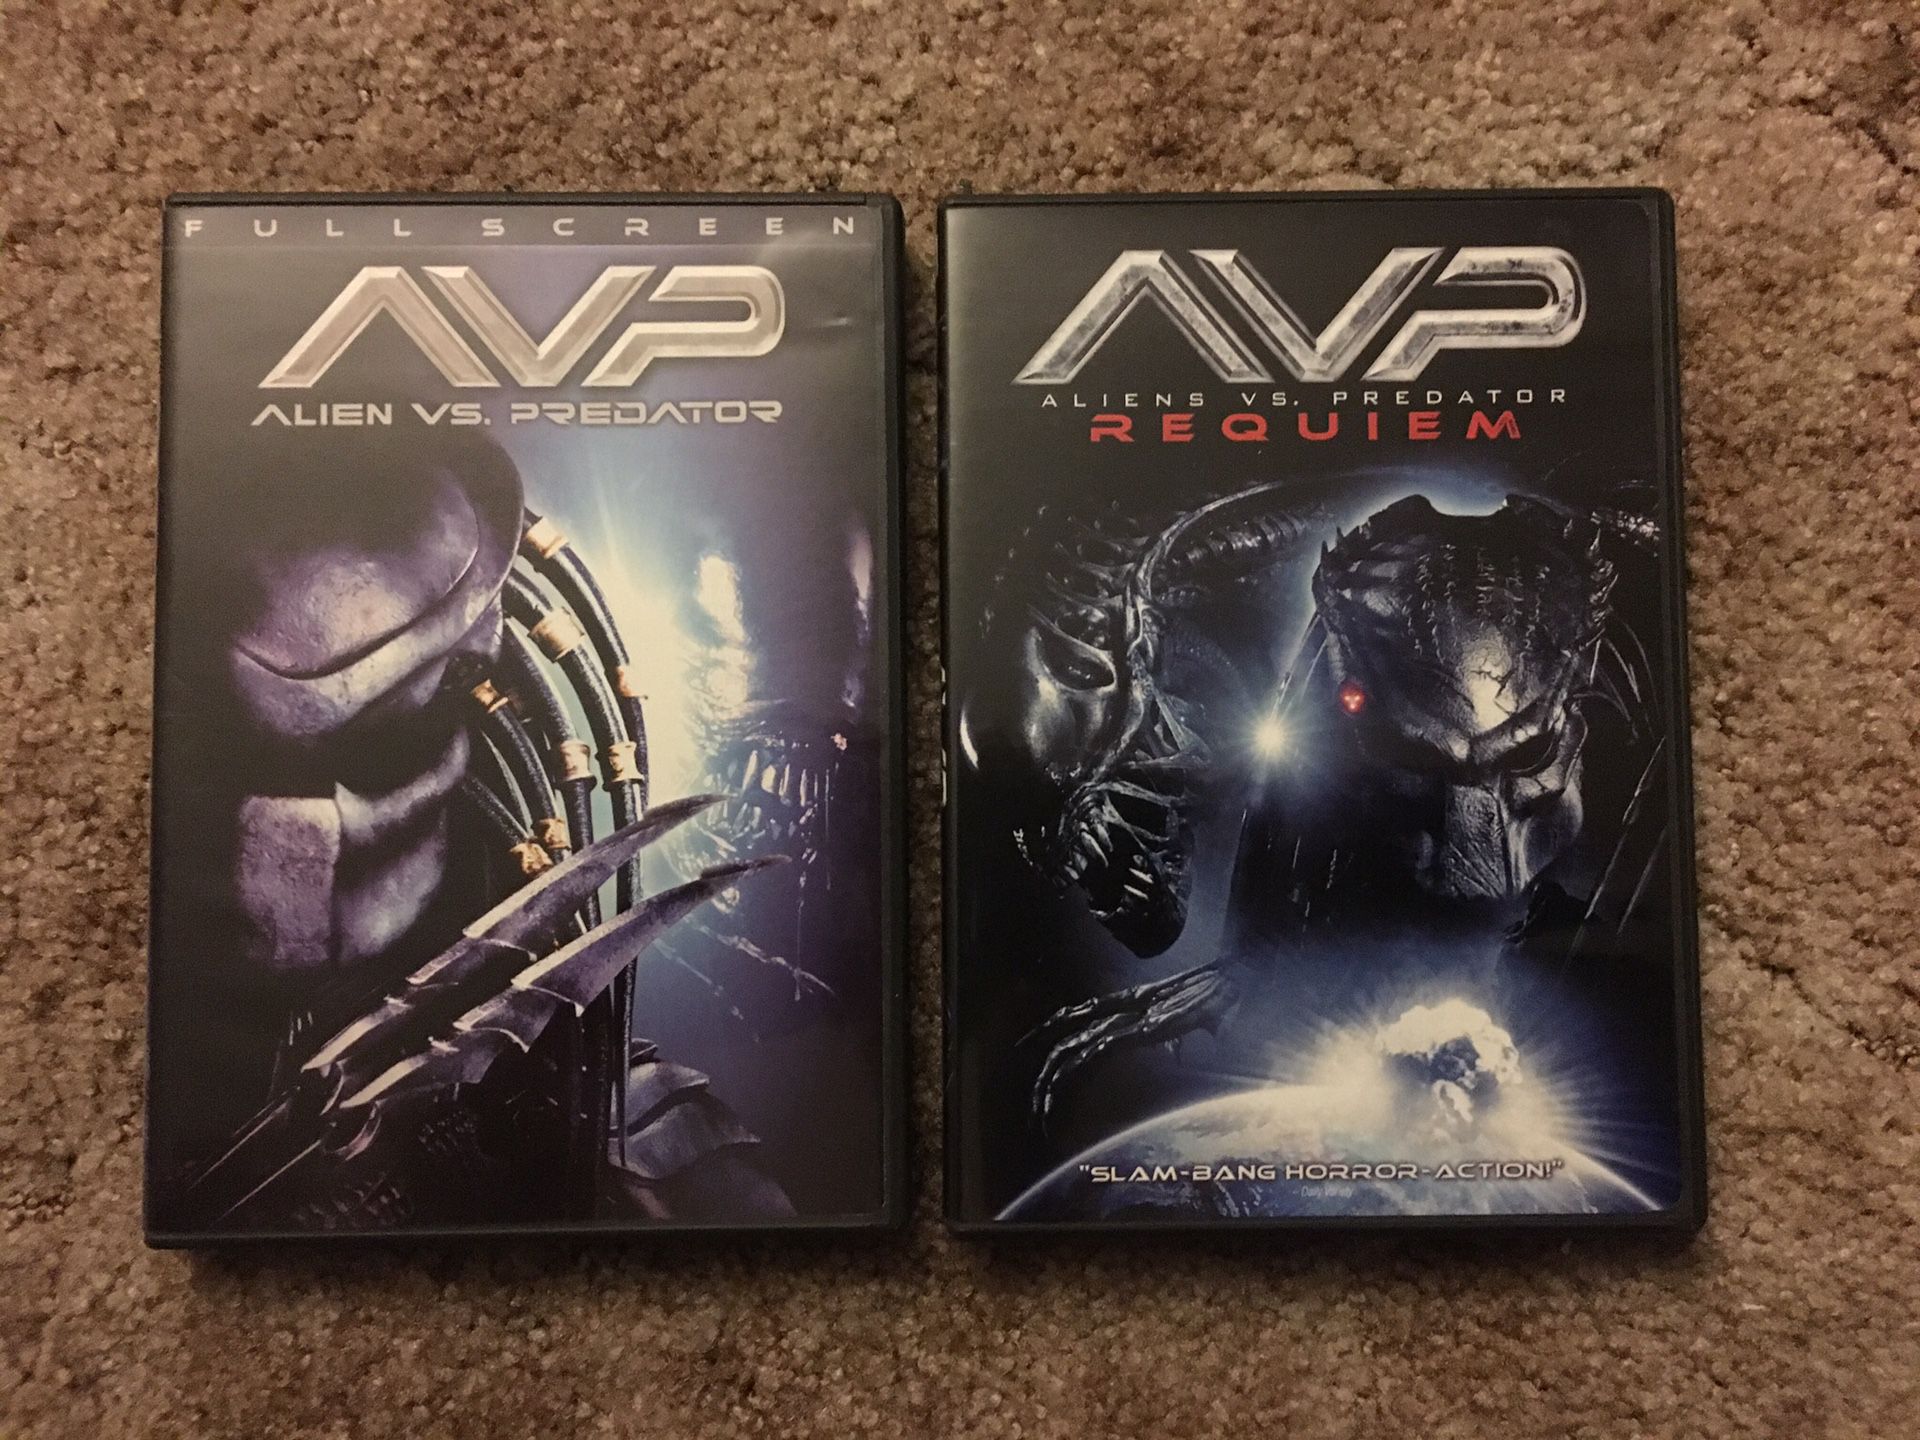 Alien Vs Predator. Parts 1 and 2.